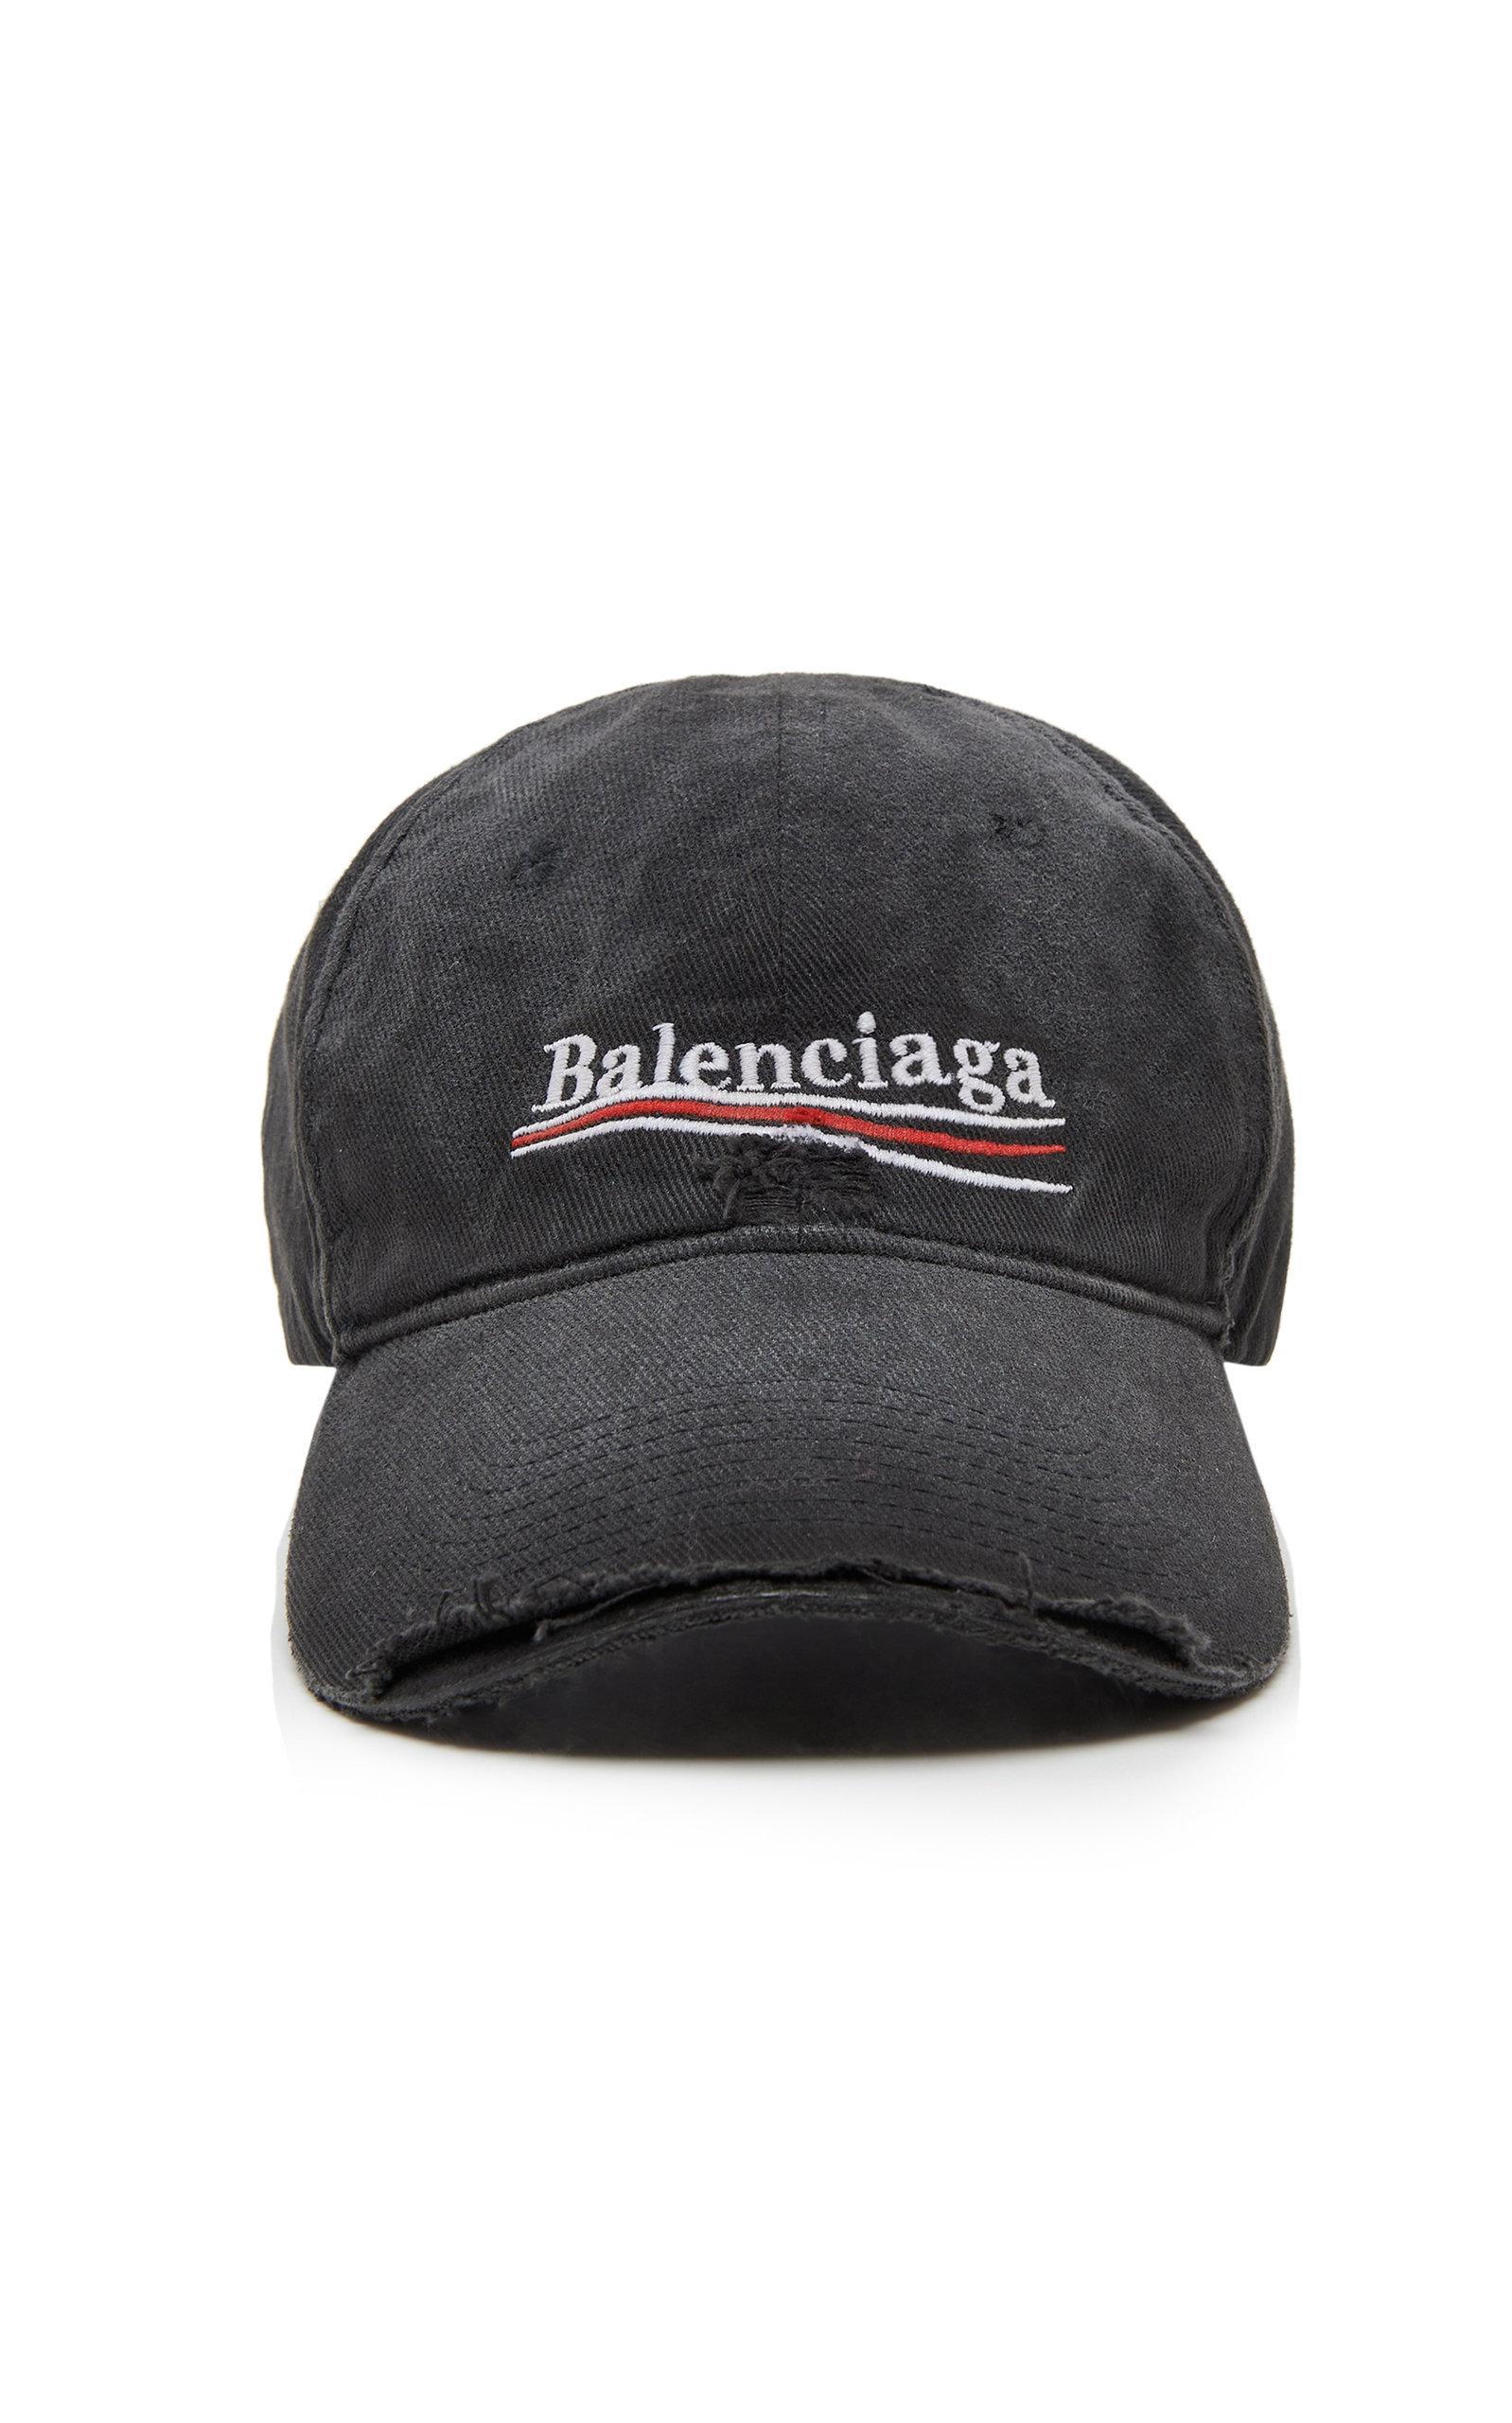 Balenciaga Political Embroidered Distressed Denim Cap in Black | Lyst